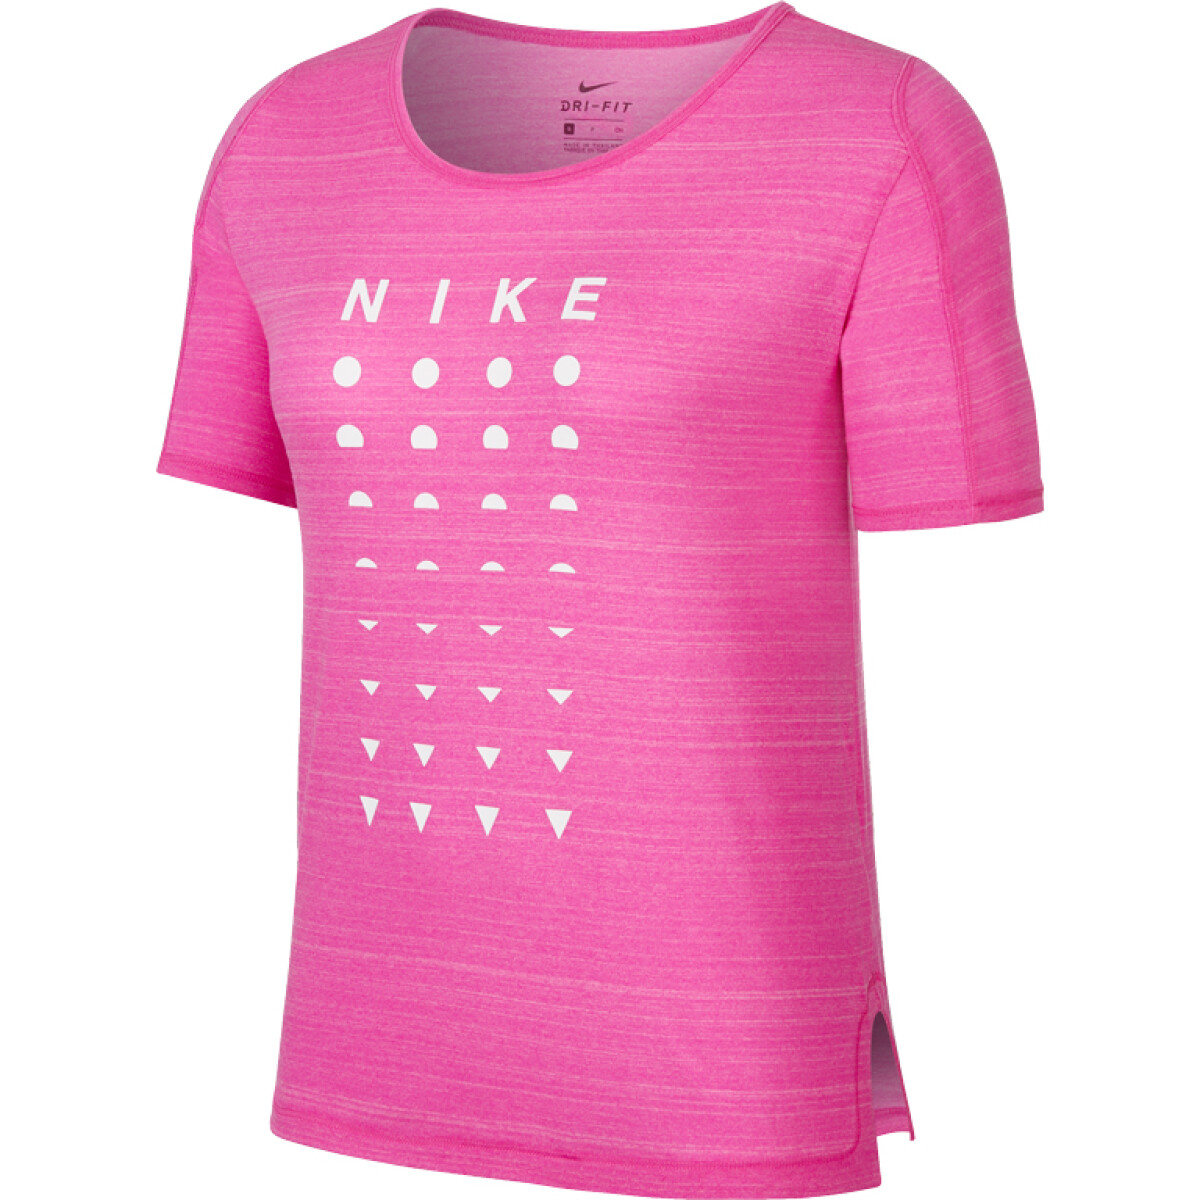 Remera Nike Running Dama Icnclsh Rosa - Color Único 